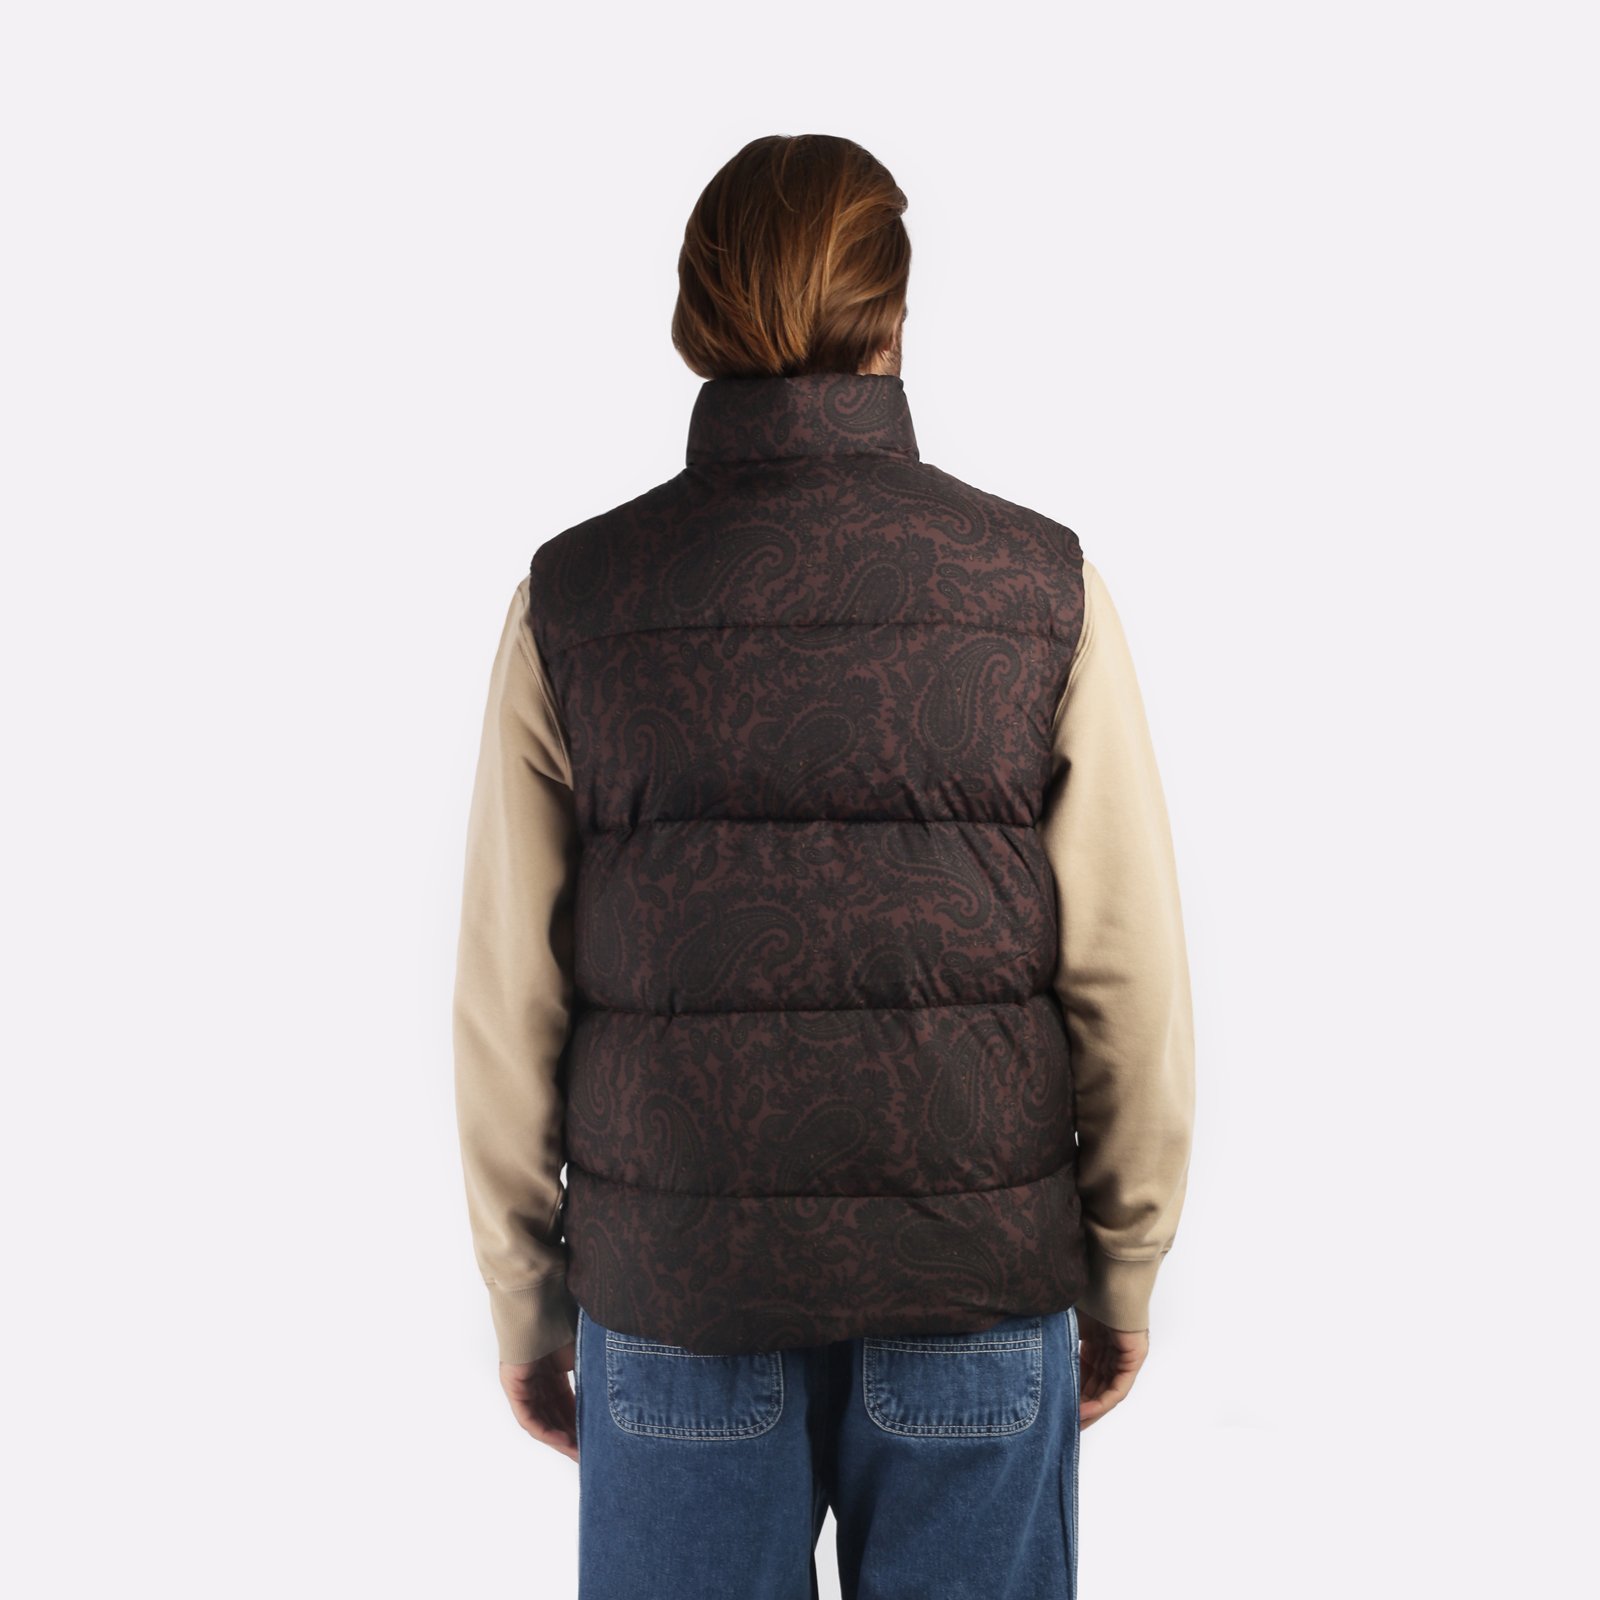 мужской жилет Carhartt WIP Springfield Vest  (I032265-buckeye/black)  - цена, описание, фото 2